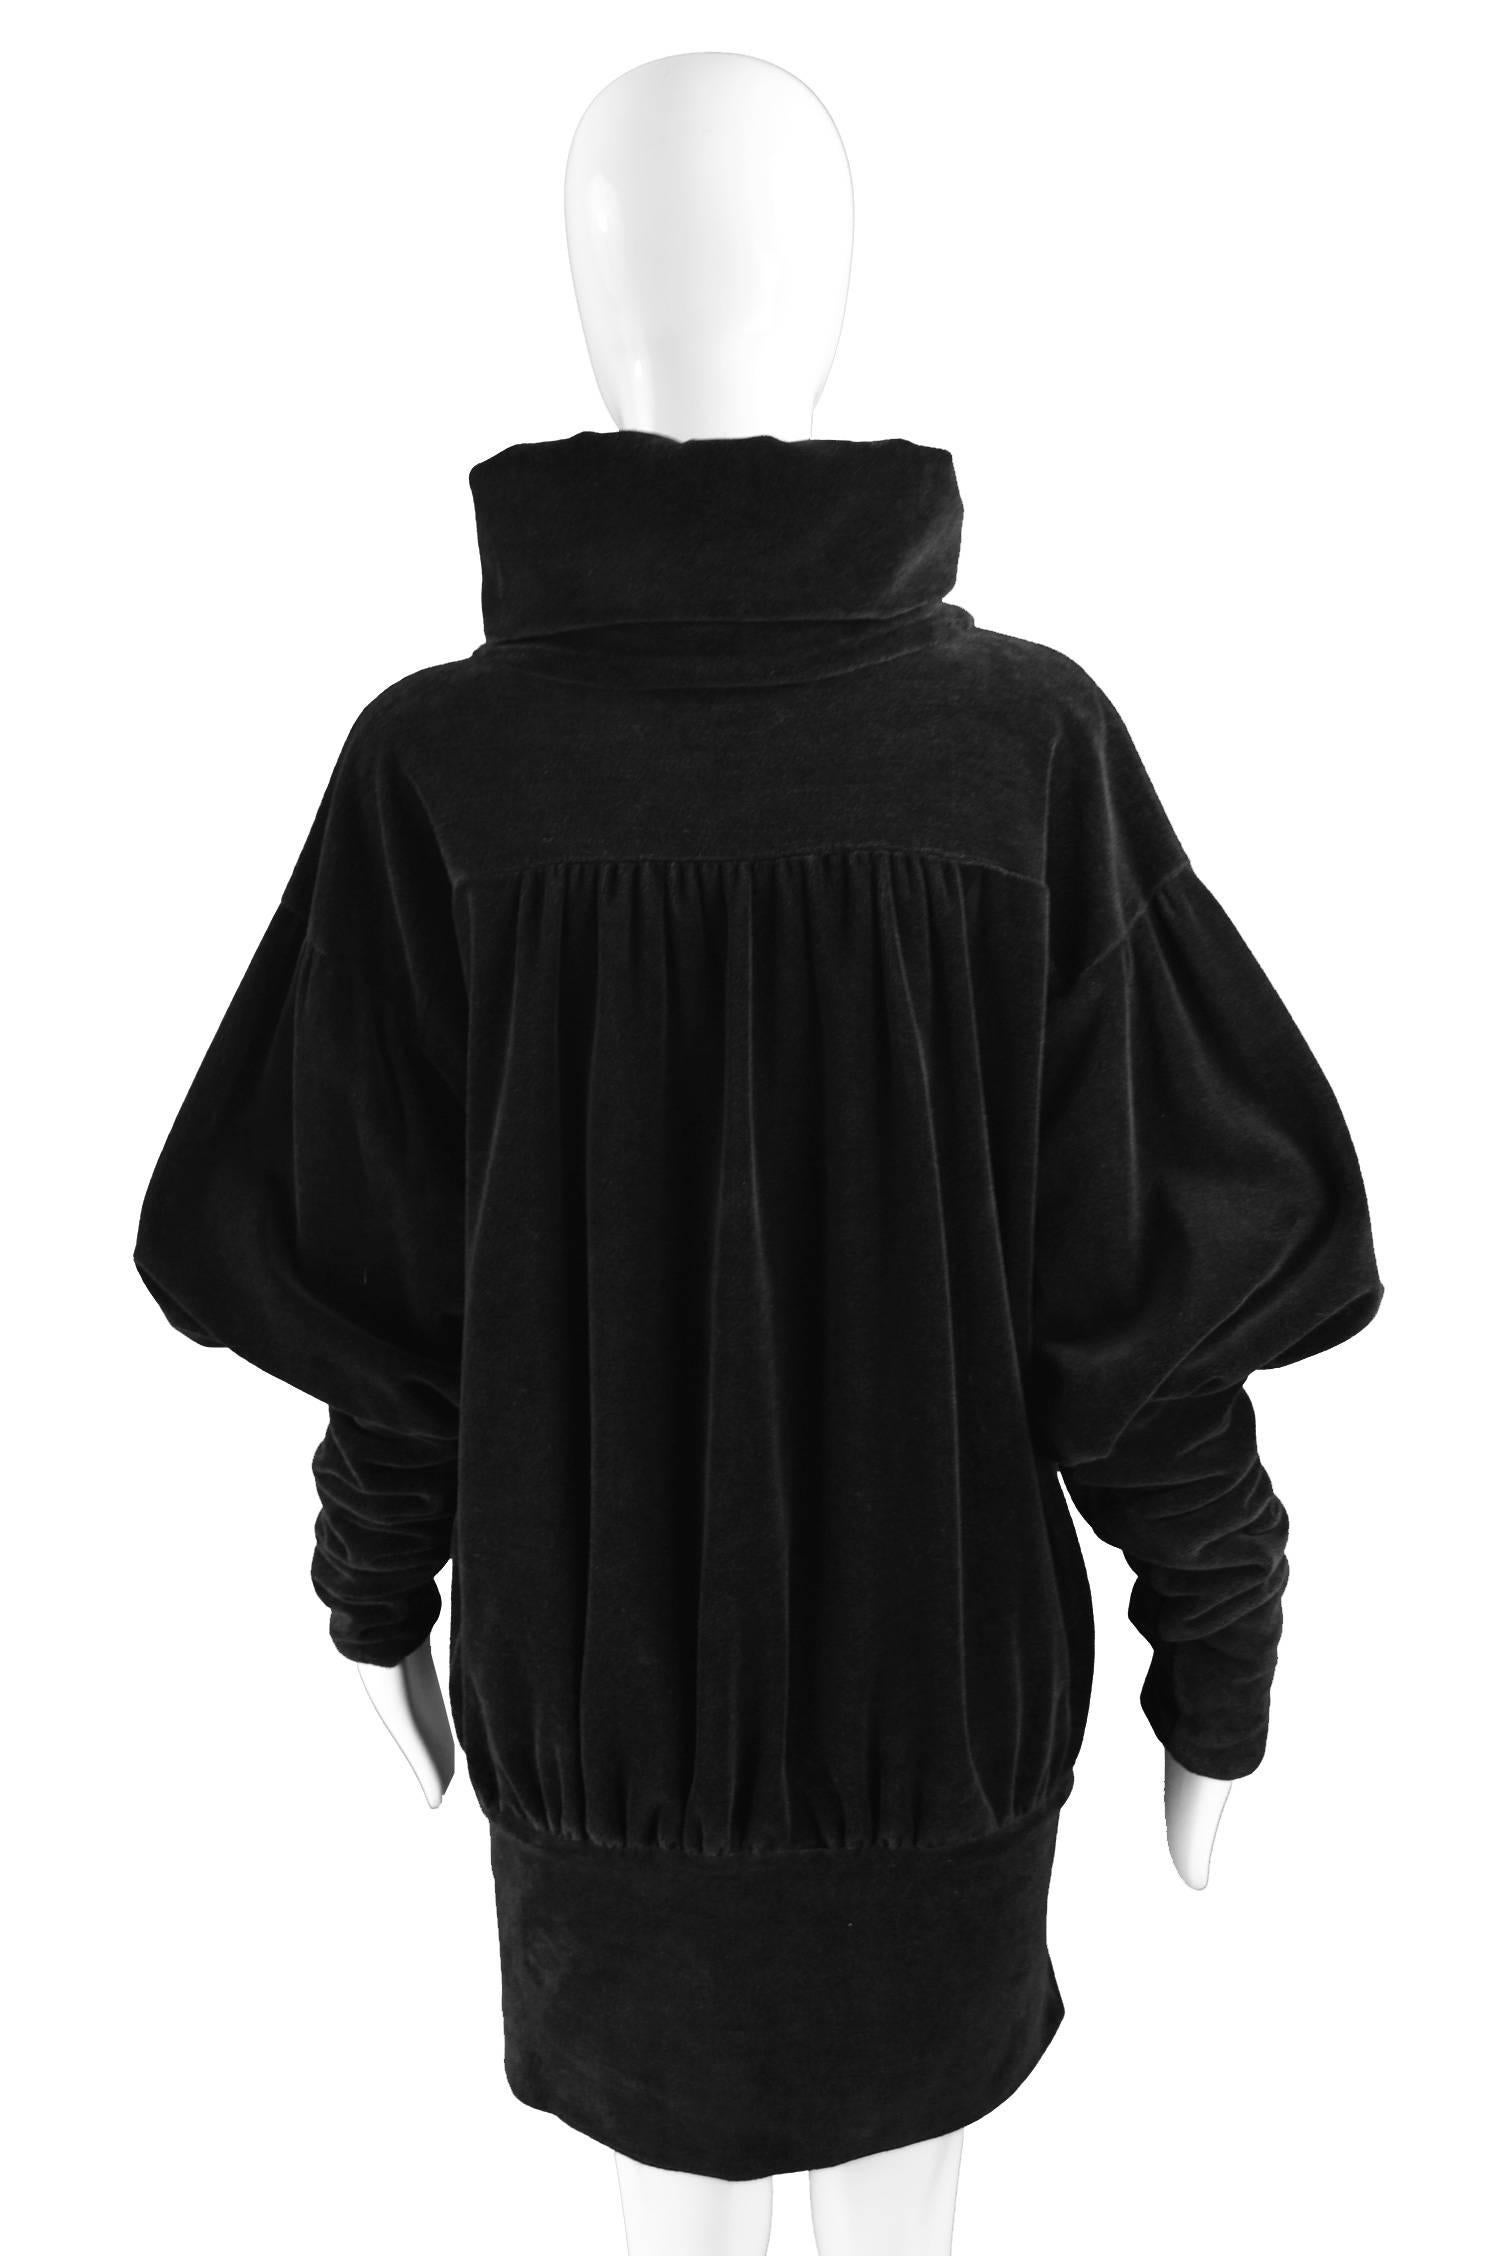 Gina Fratini Avant Garde Black Puff Sleeve Velour Dress, 1970s 3